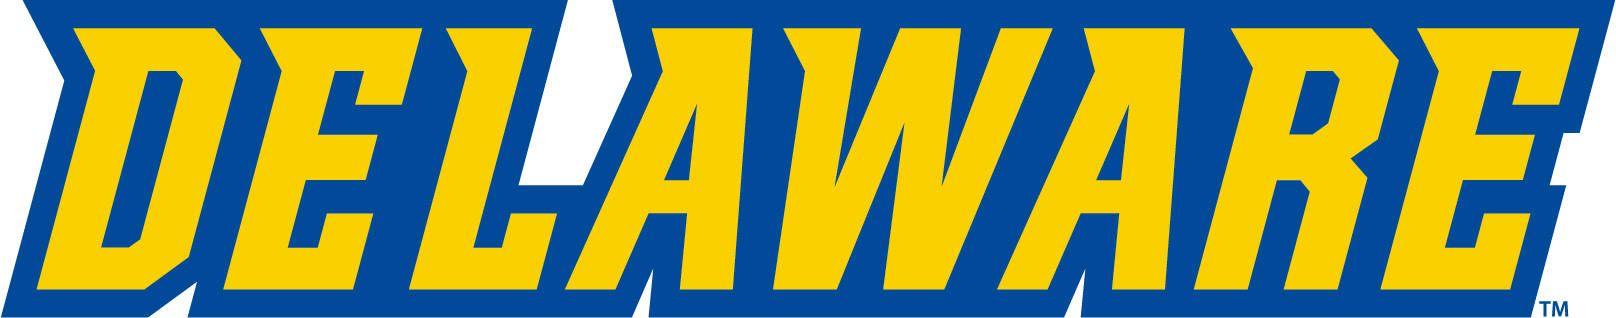 Delaware Logo - Logo Usage - University of Delaware Athletics